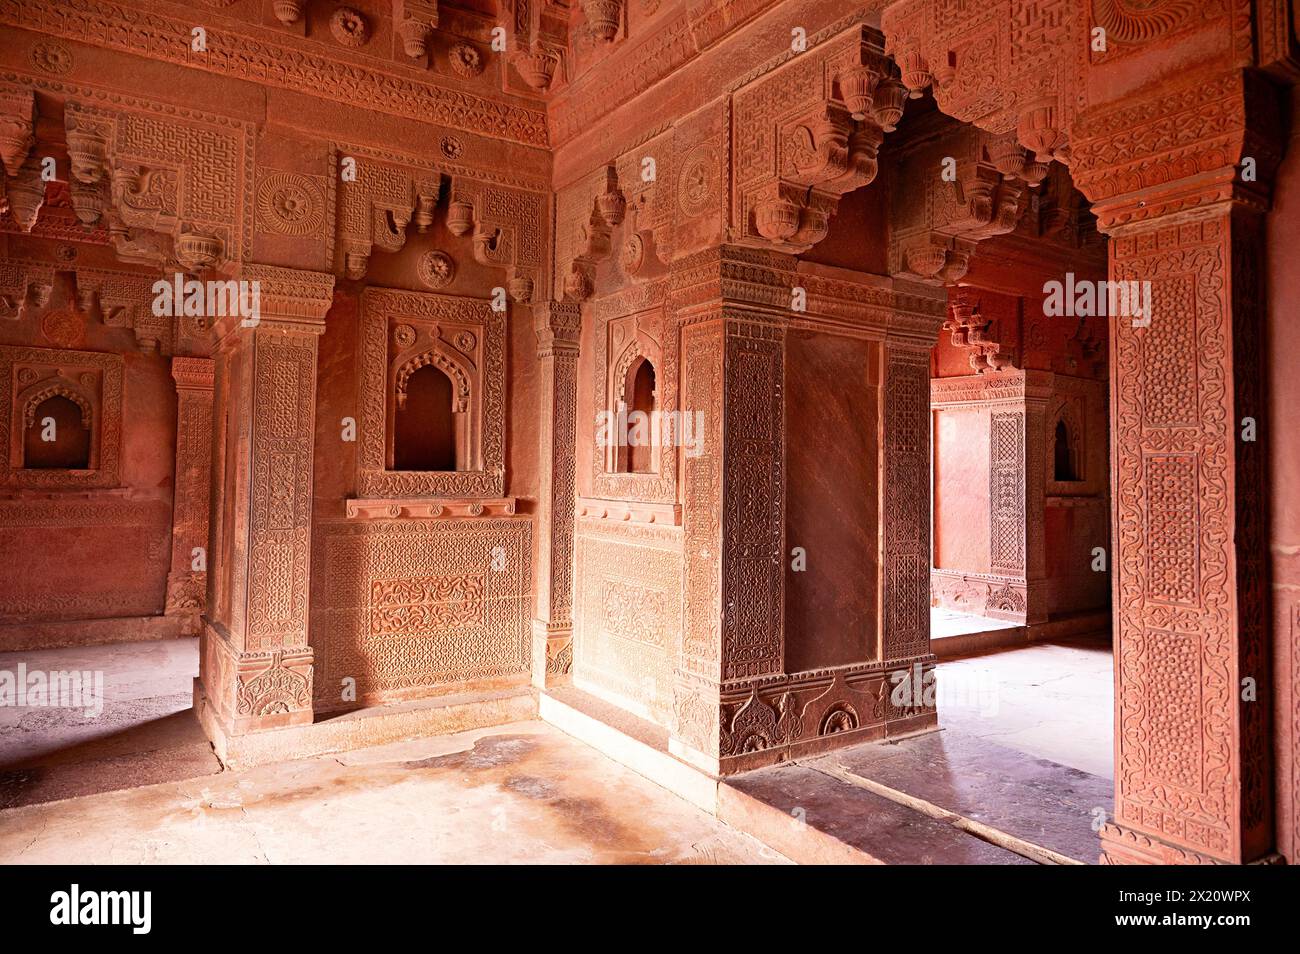 Intérieurs, Raja Birbal's House, Fatehpur Sikri, Uttar Pradesh, Inde Banque D'Images